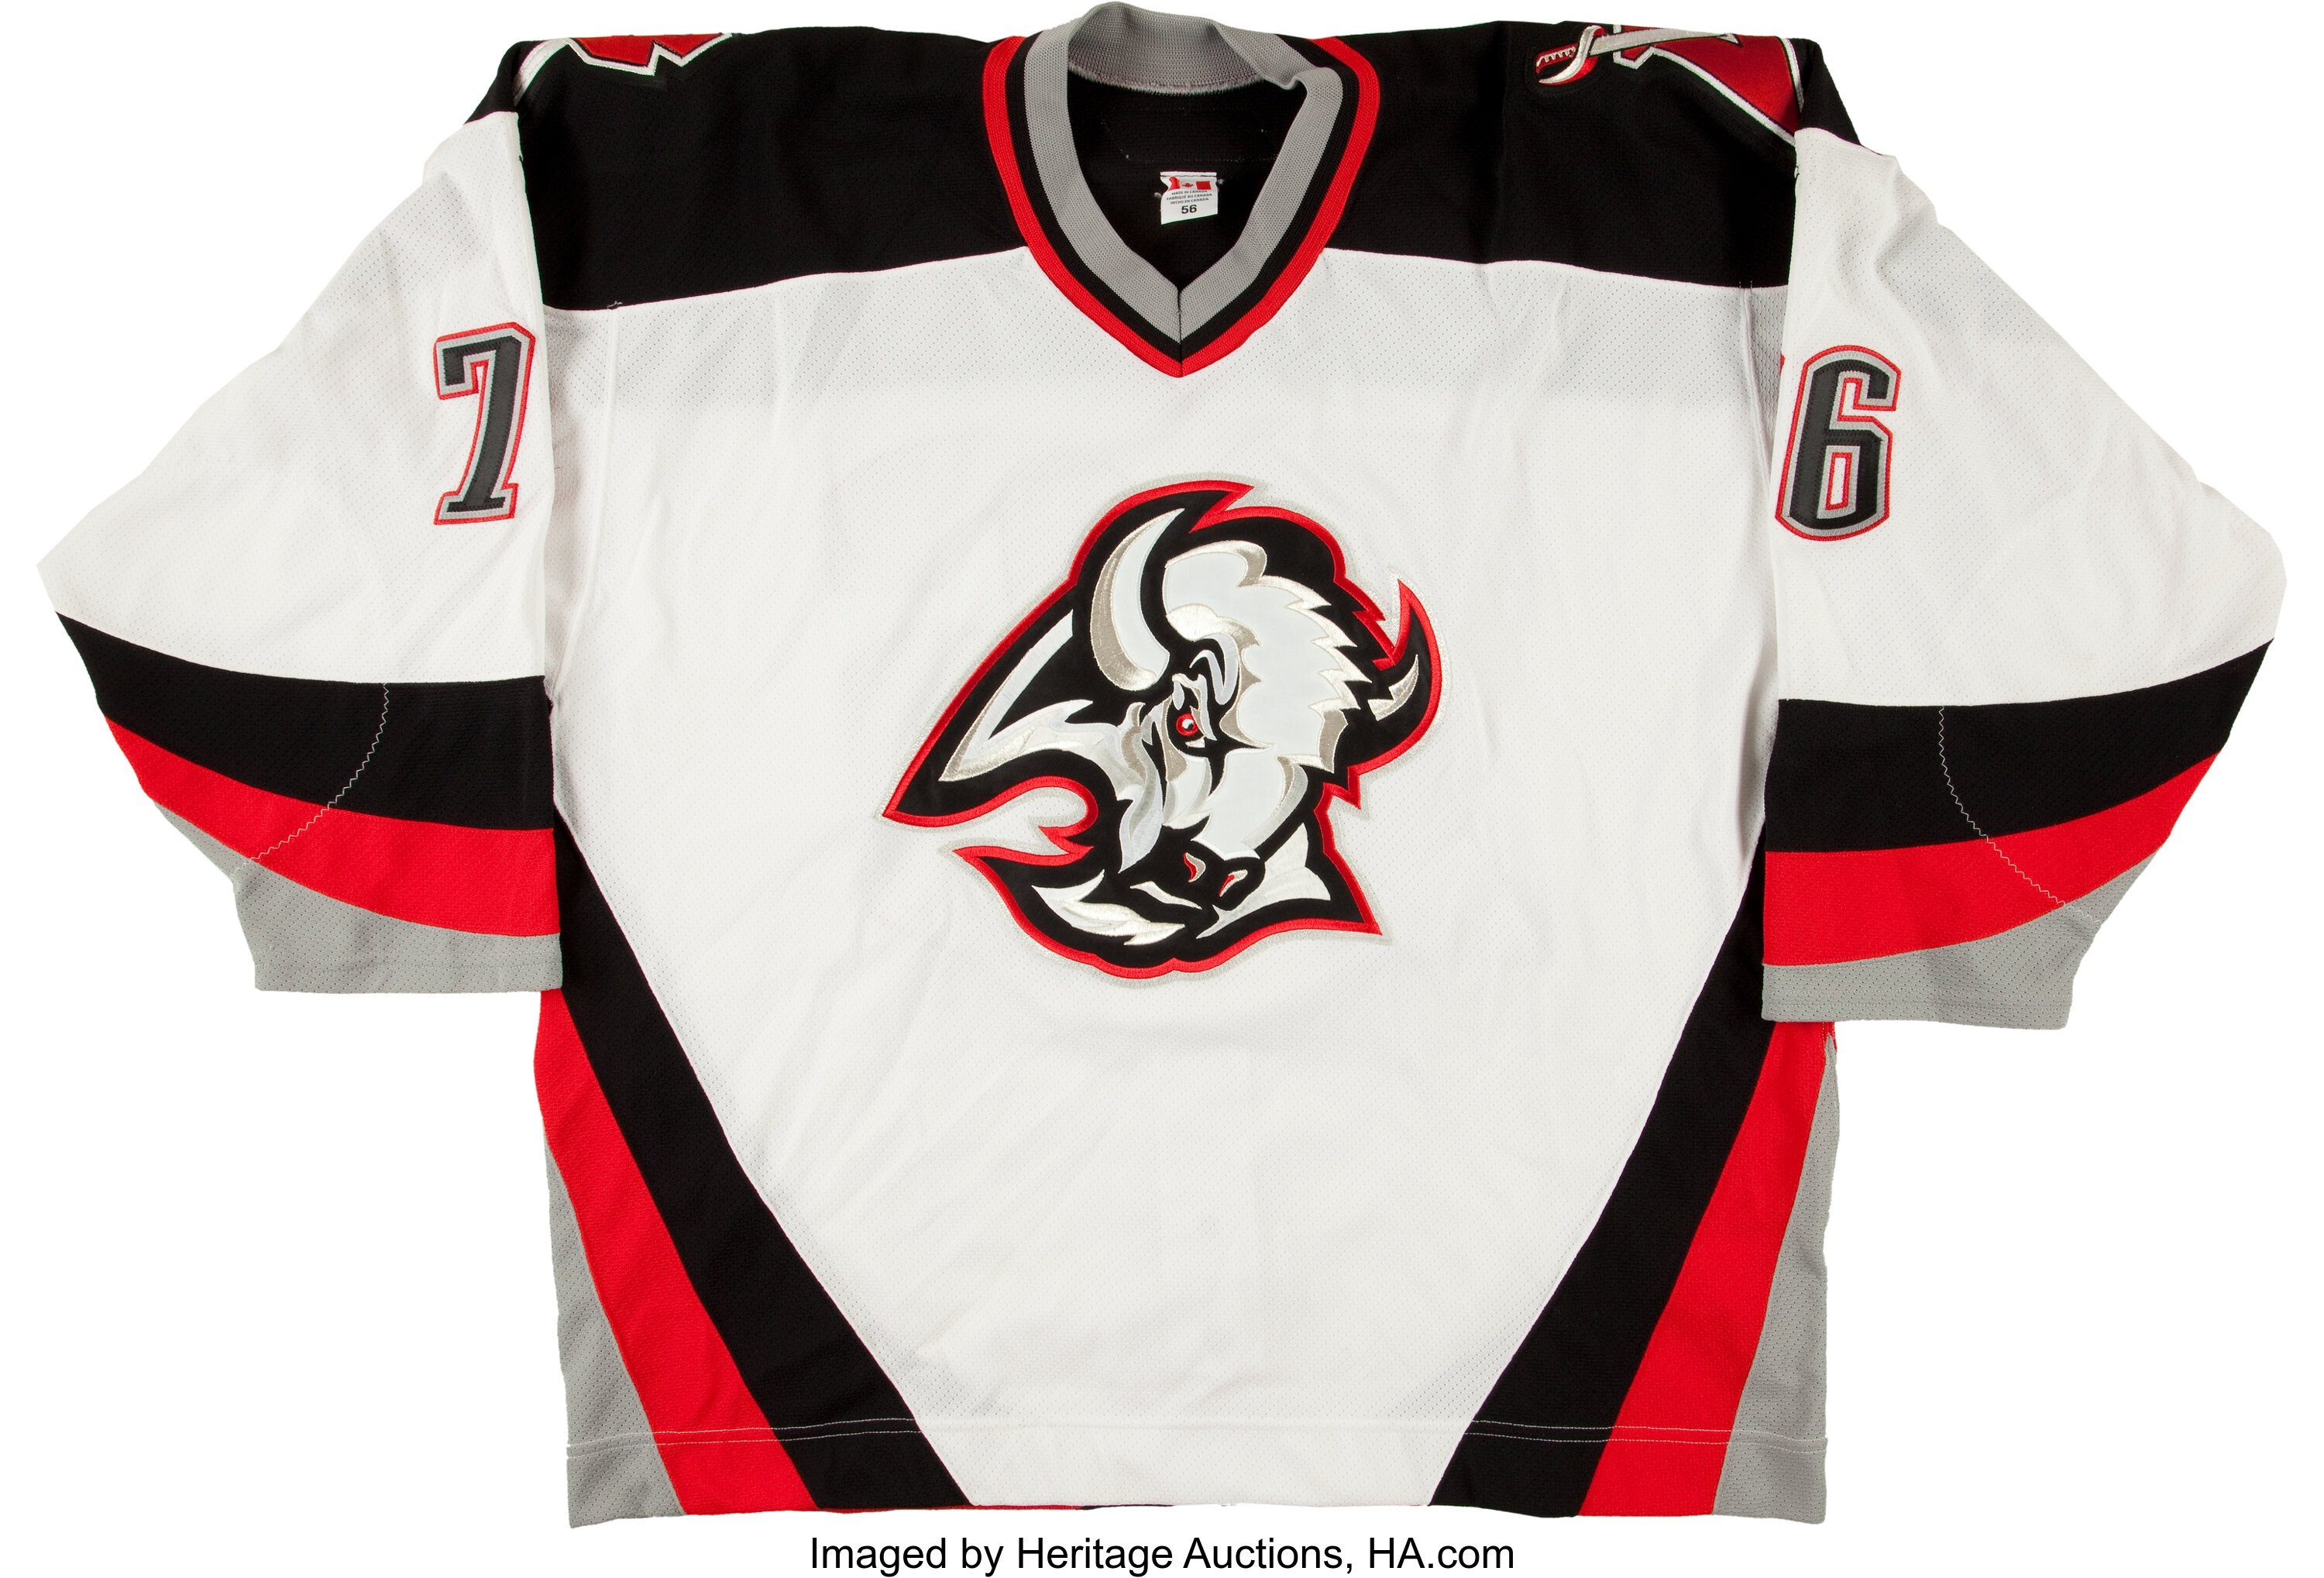 2005 Buffalo Sabres Vintage Hockey Jerseys